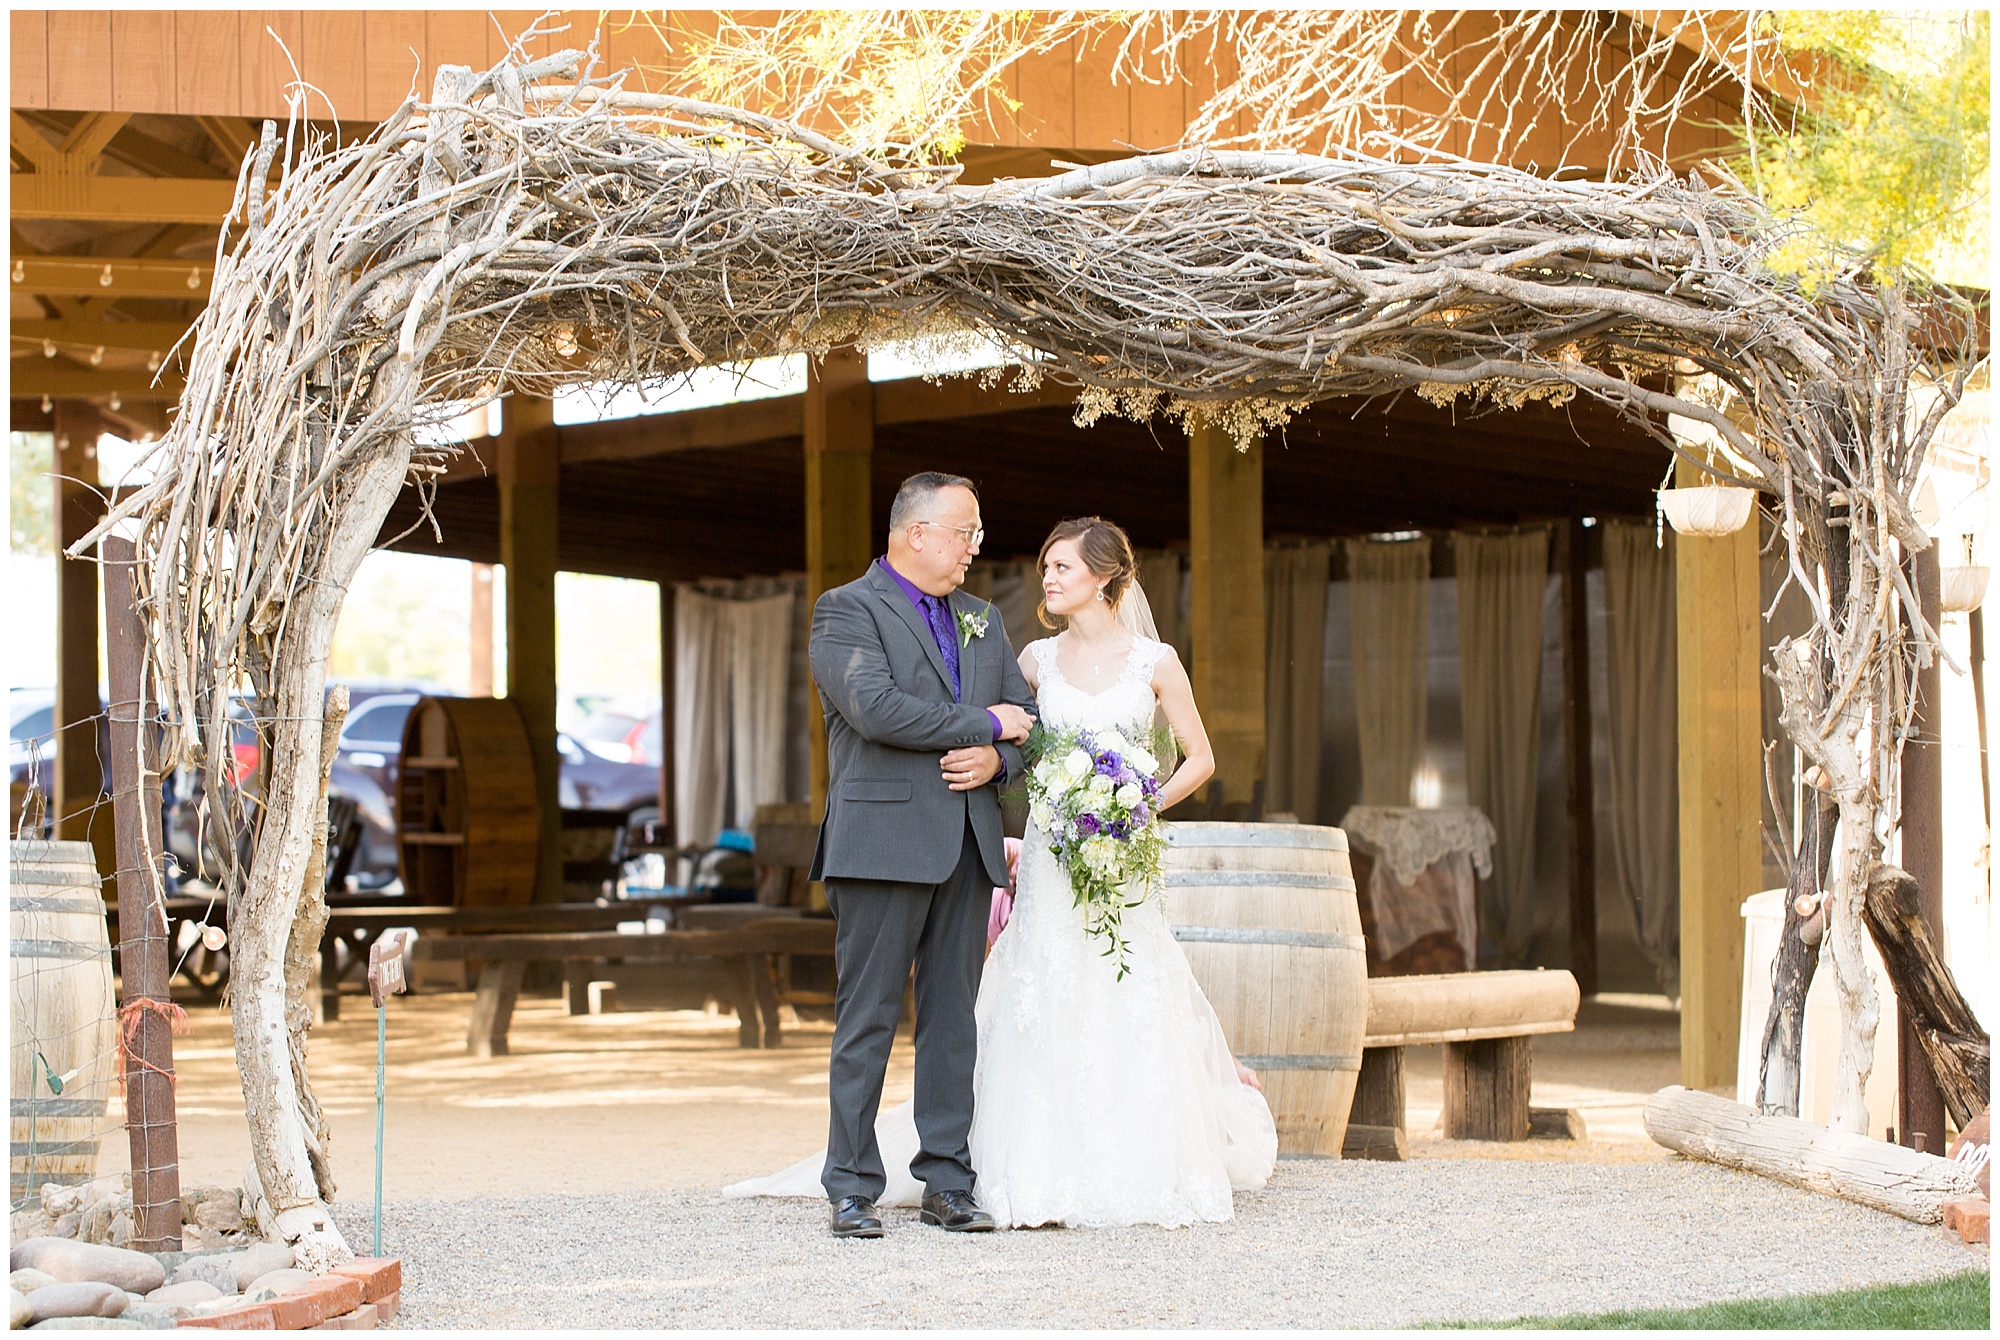 Whispering Tree Ranch Wedding: Matt and Heather